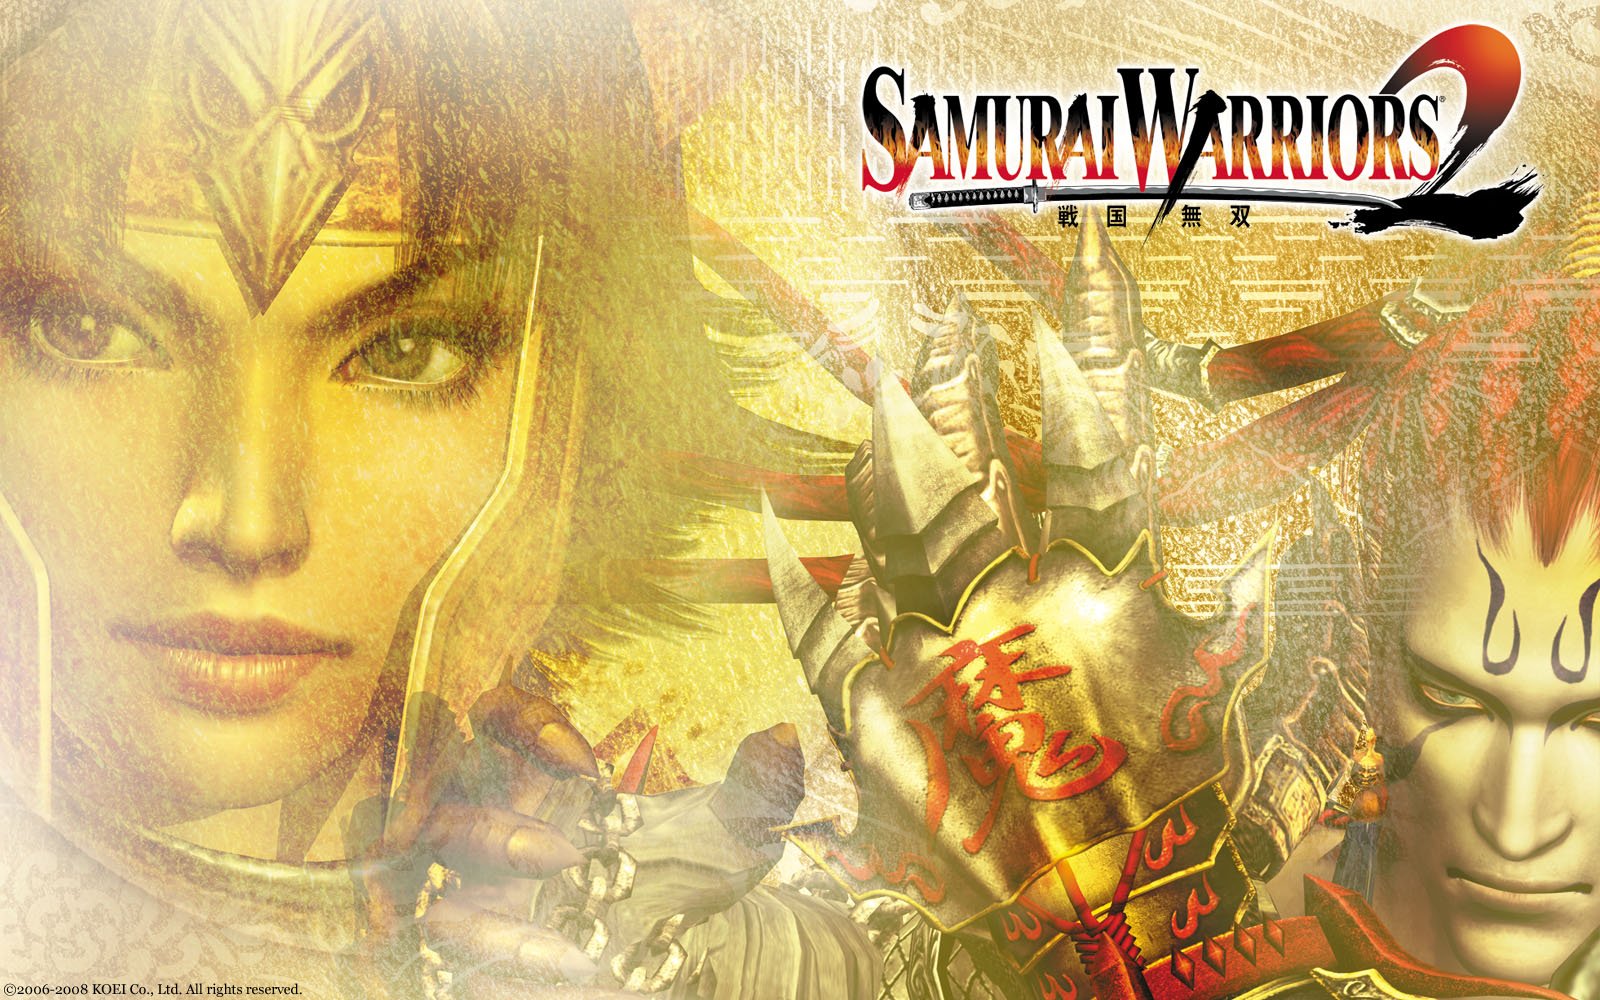 download samurai warriors 3 pc full